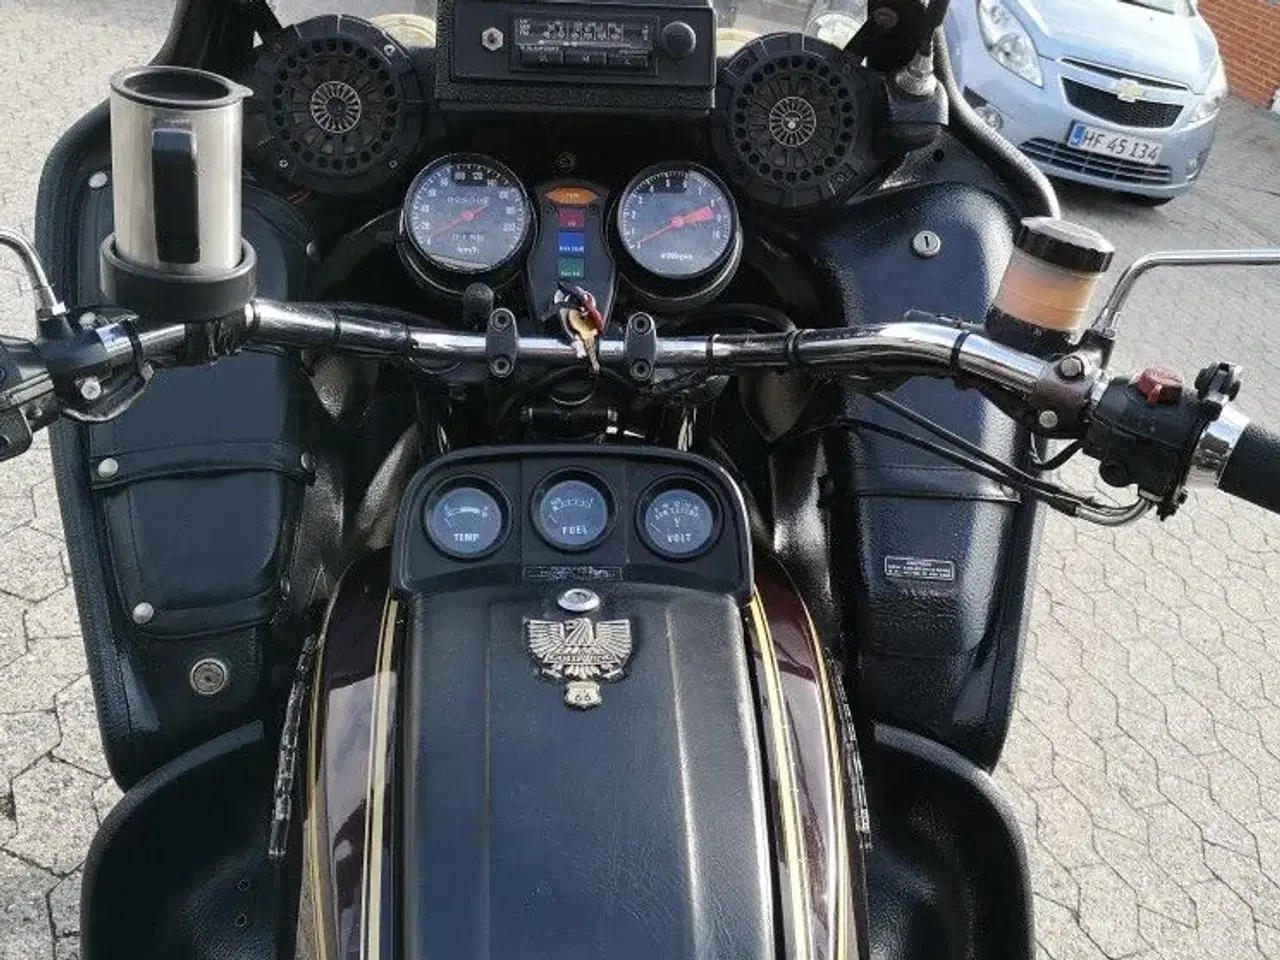 Billede 3 - Rigtig fin "veteran" motorcykel